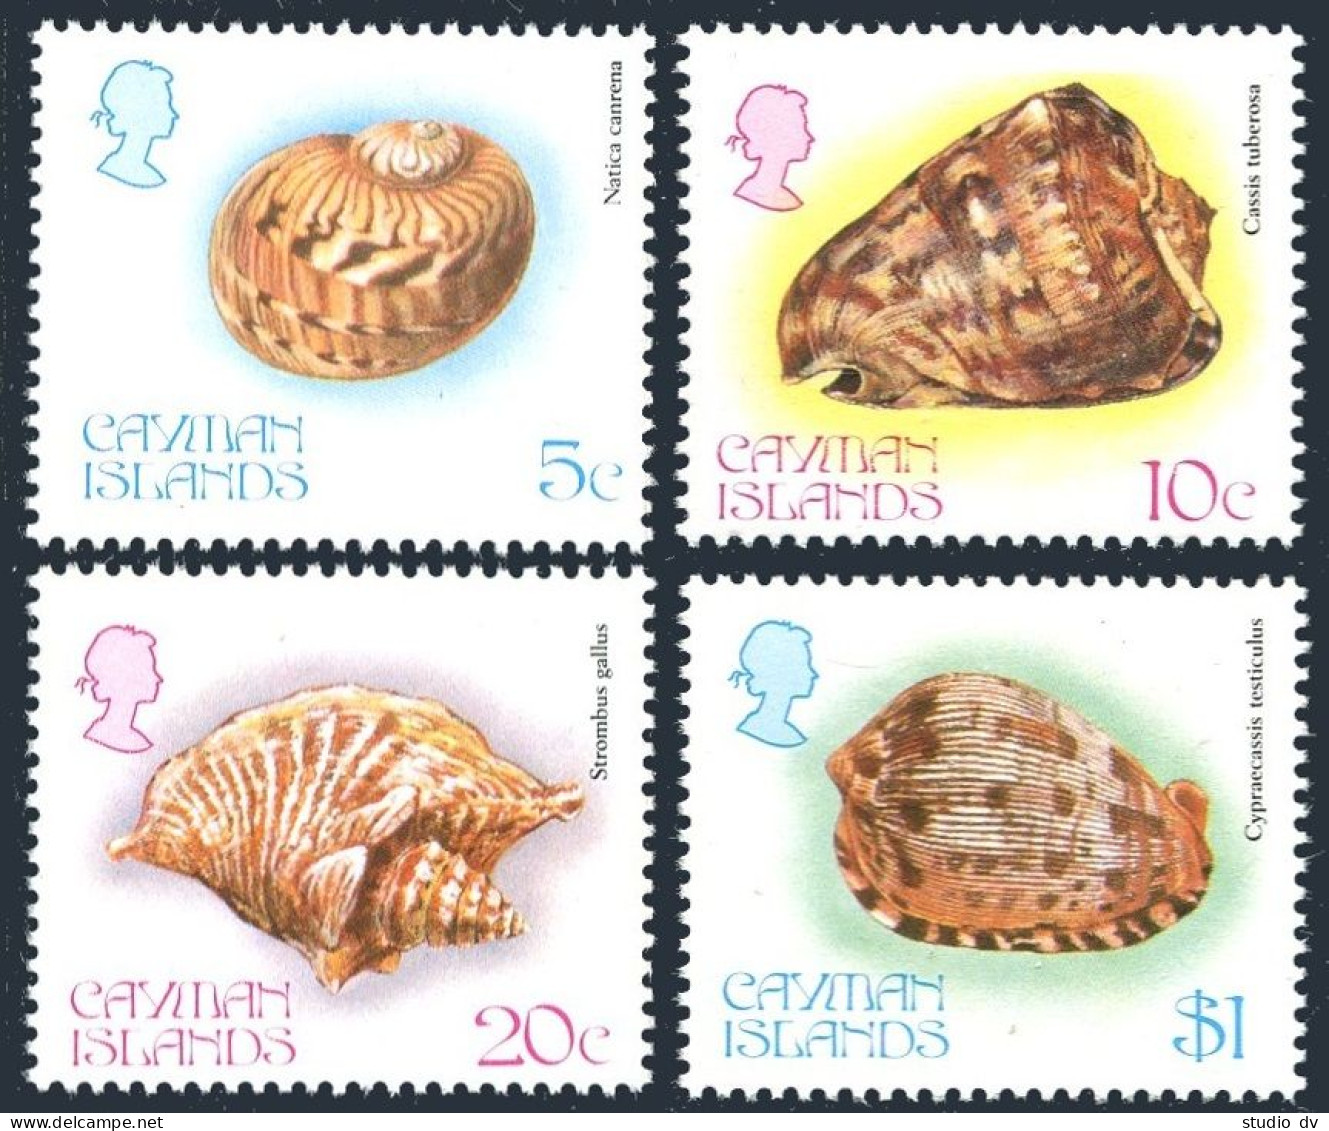 Cayman 502-505, MNH. Mi 506-509. Shells 1983. Natica Canrena, Cassis Tuberosa, - Cayman Islands